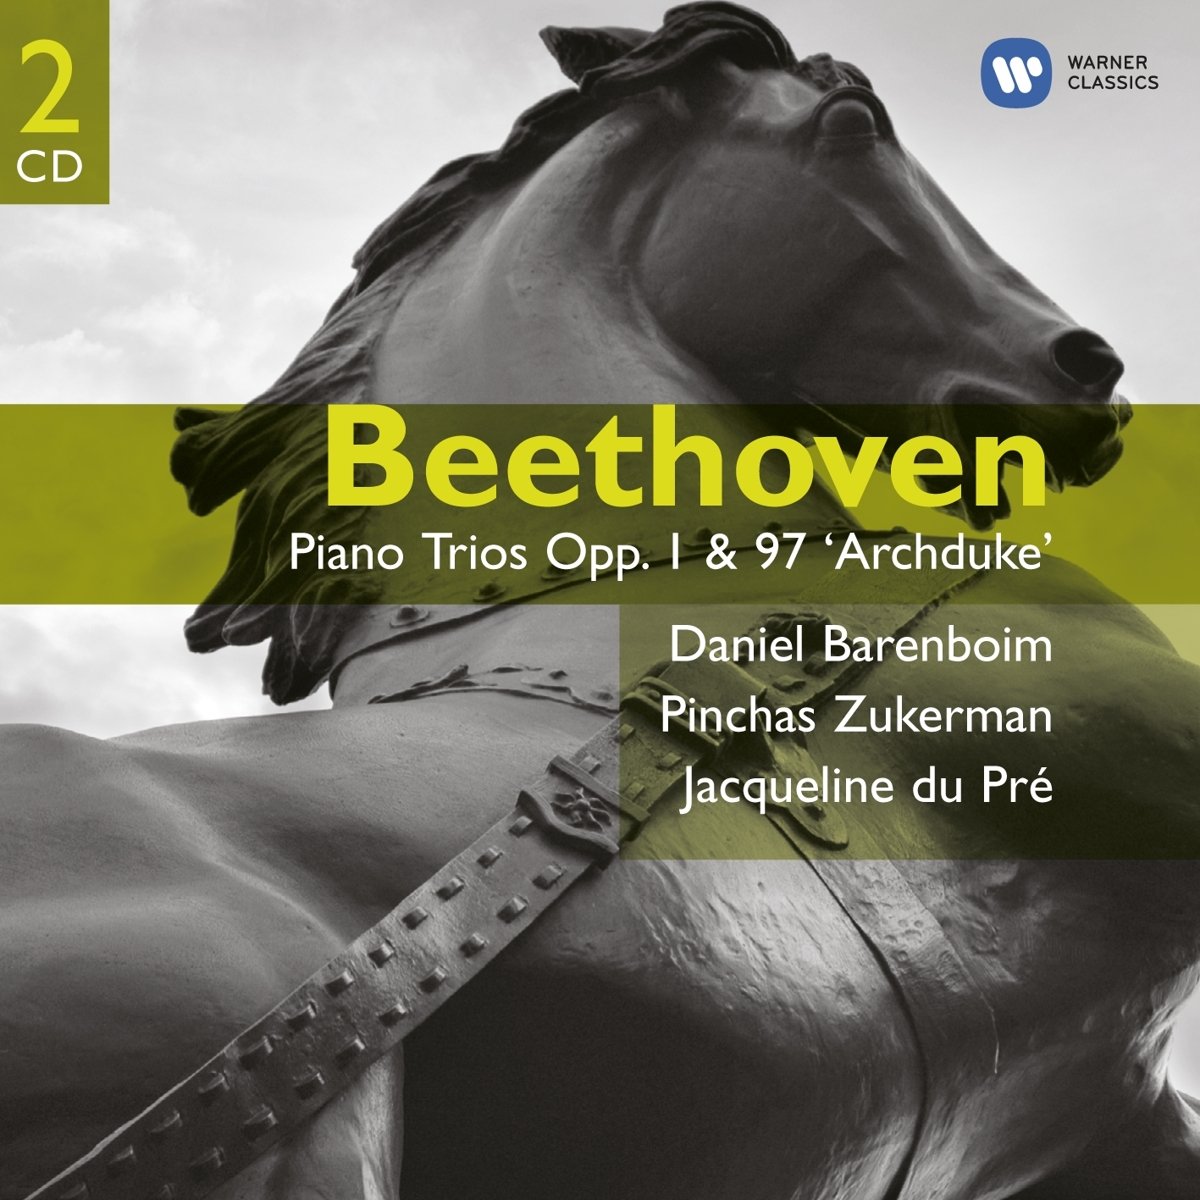 Beethoven: Piano Trios Vol.1 Opp 1&97 'Archduke'